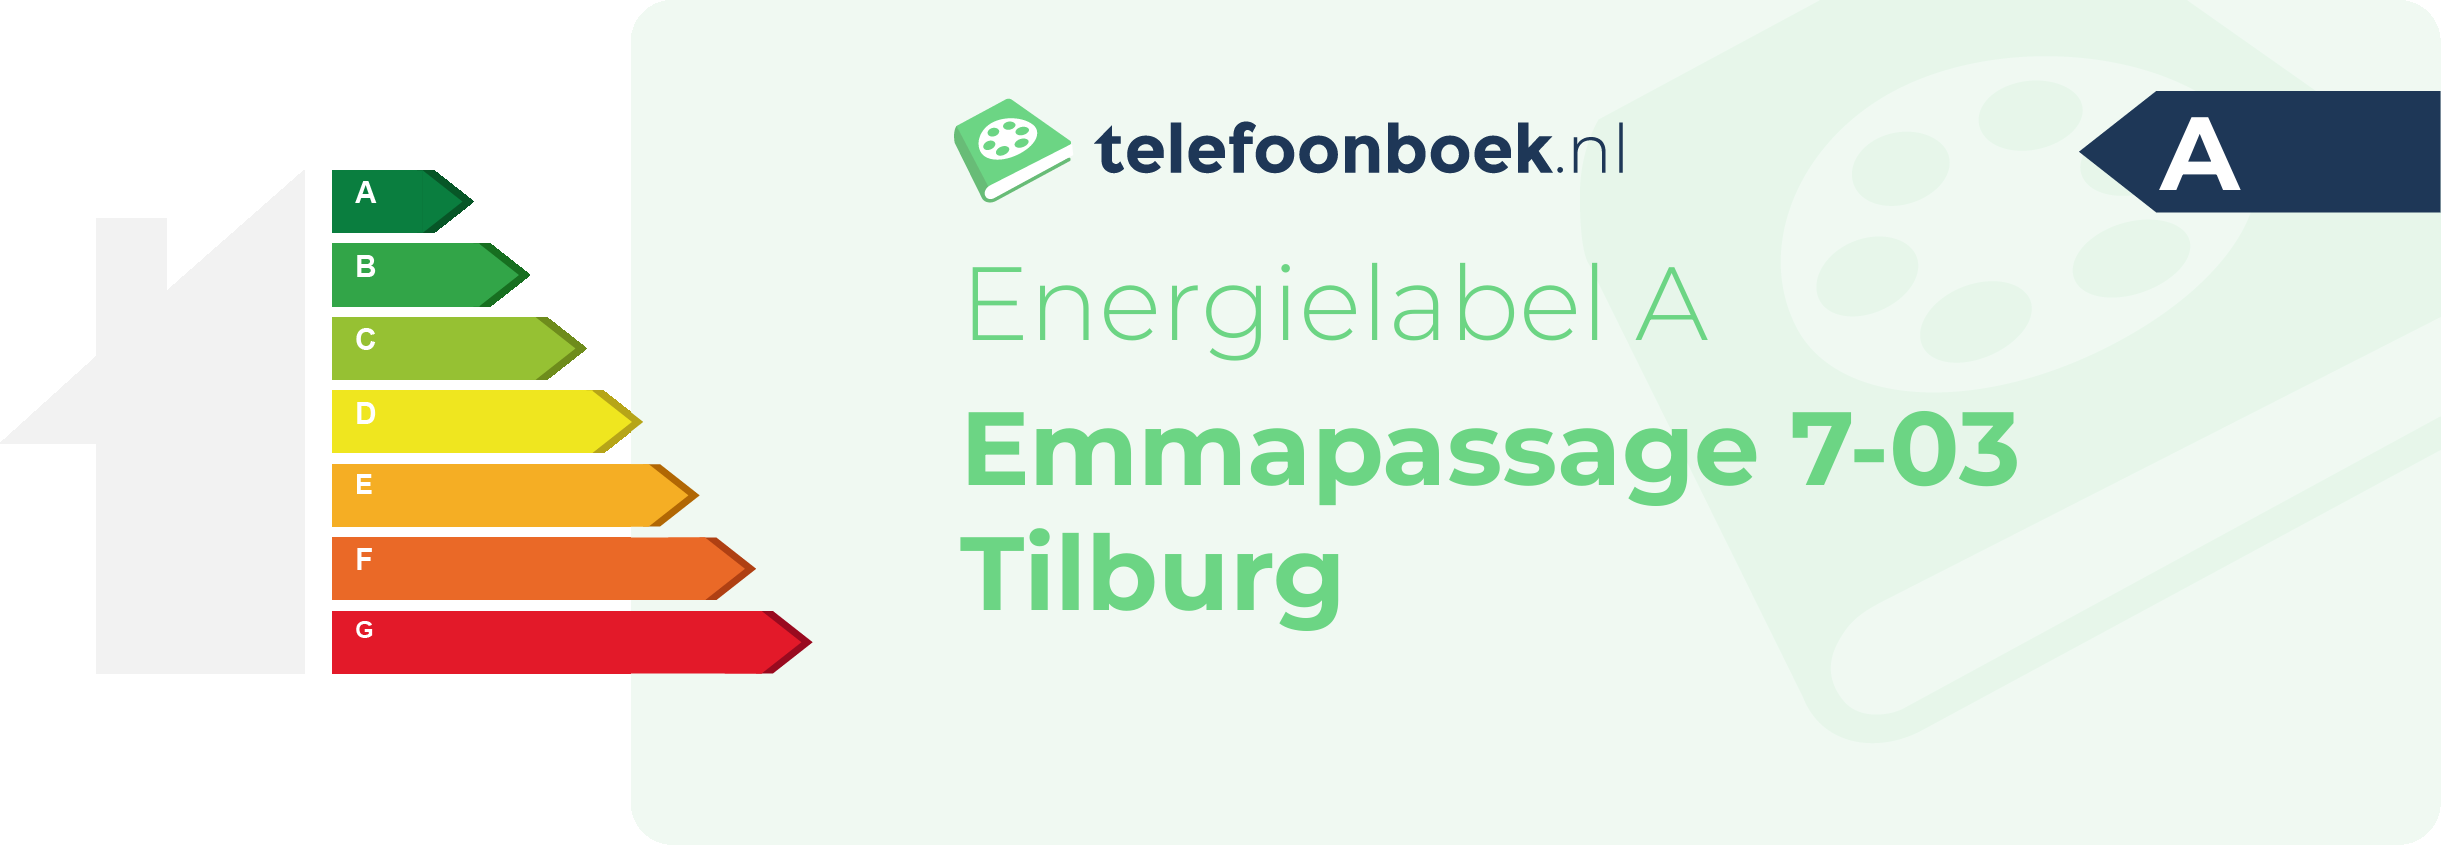 Energielabel Emmapassage 7-03 Tilburg